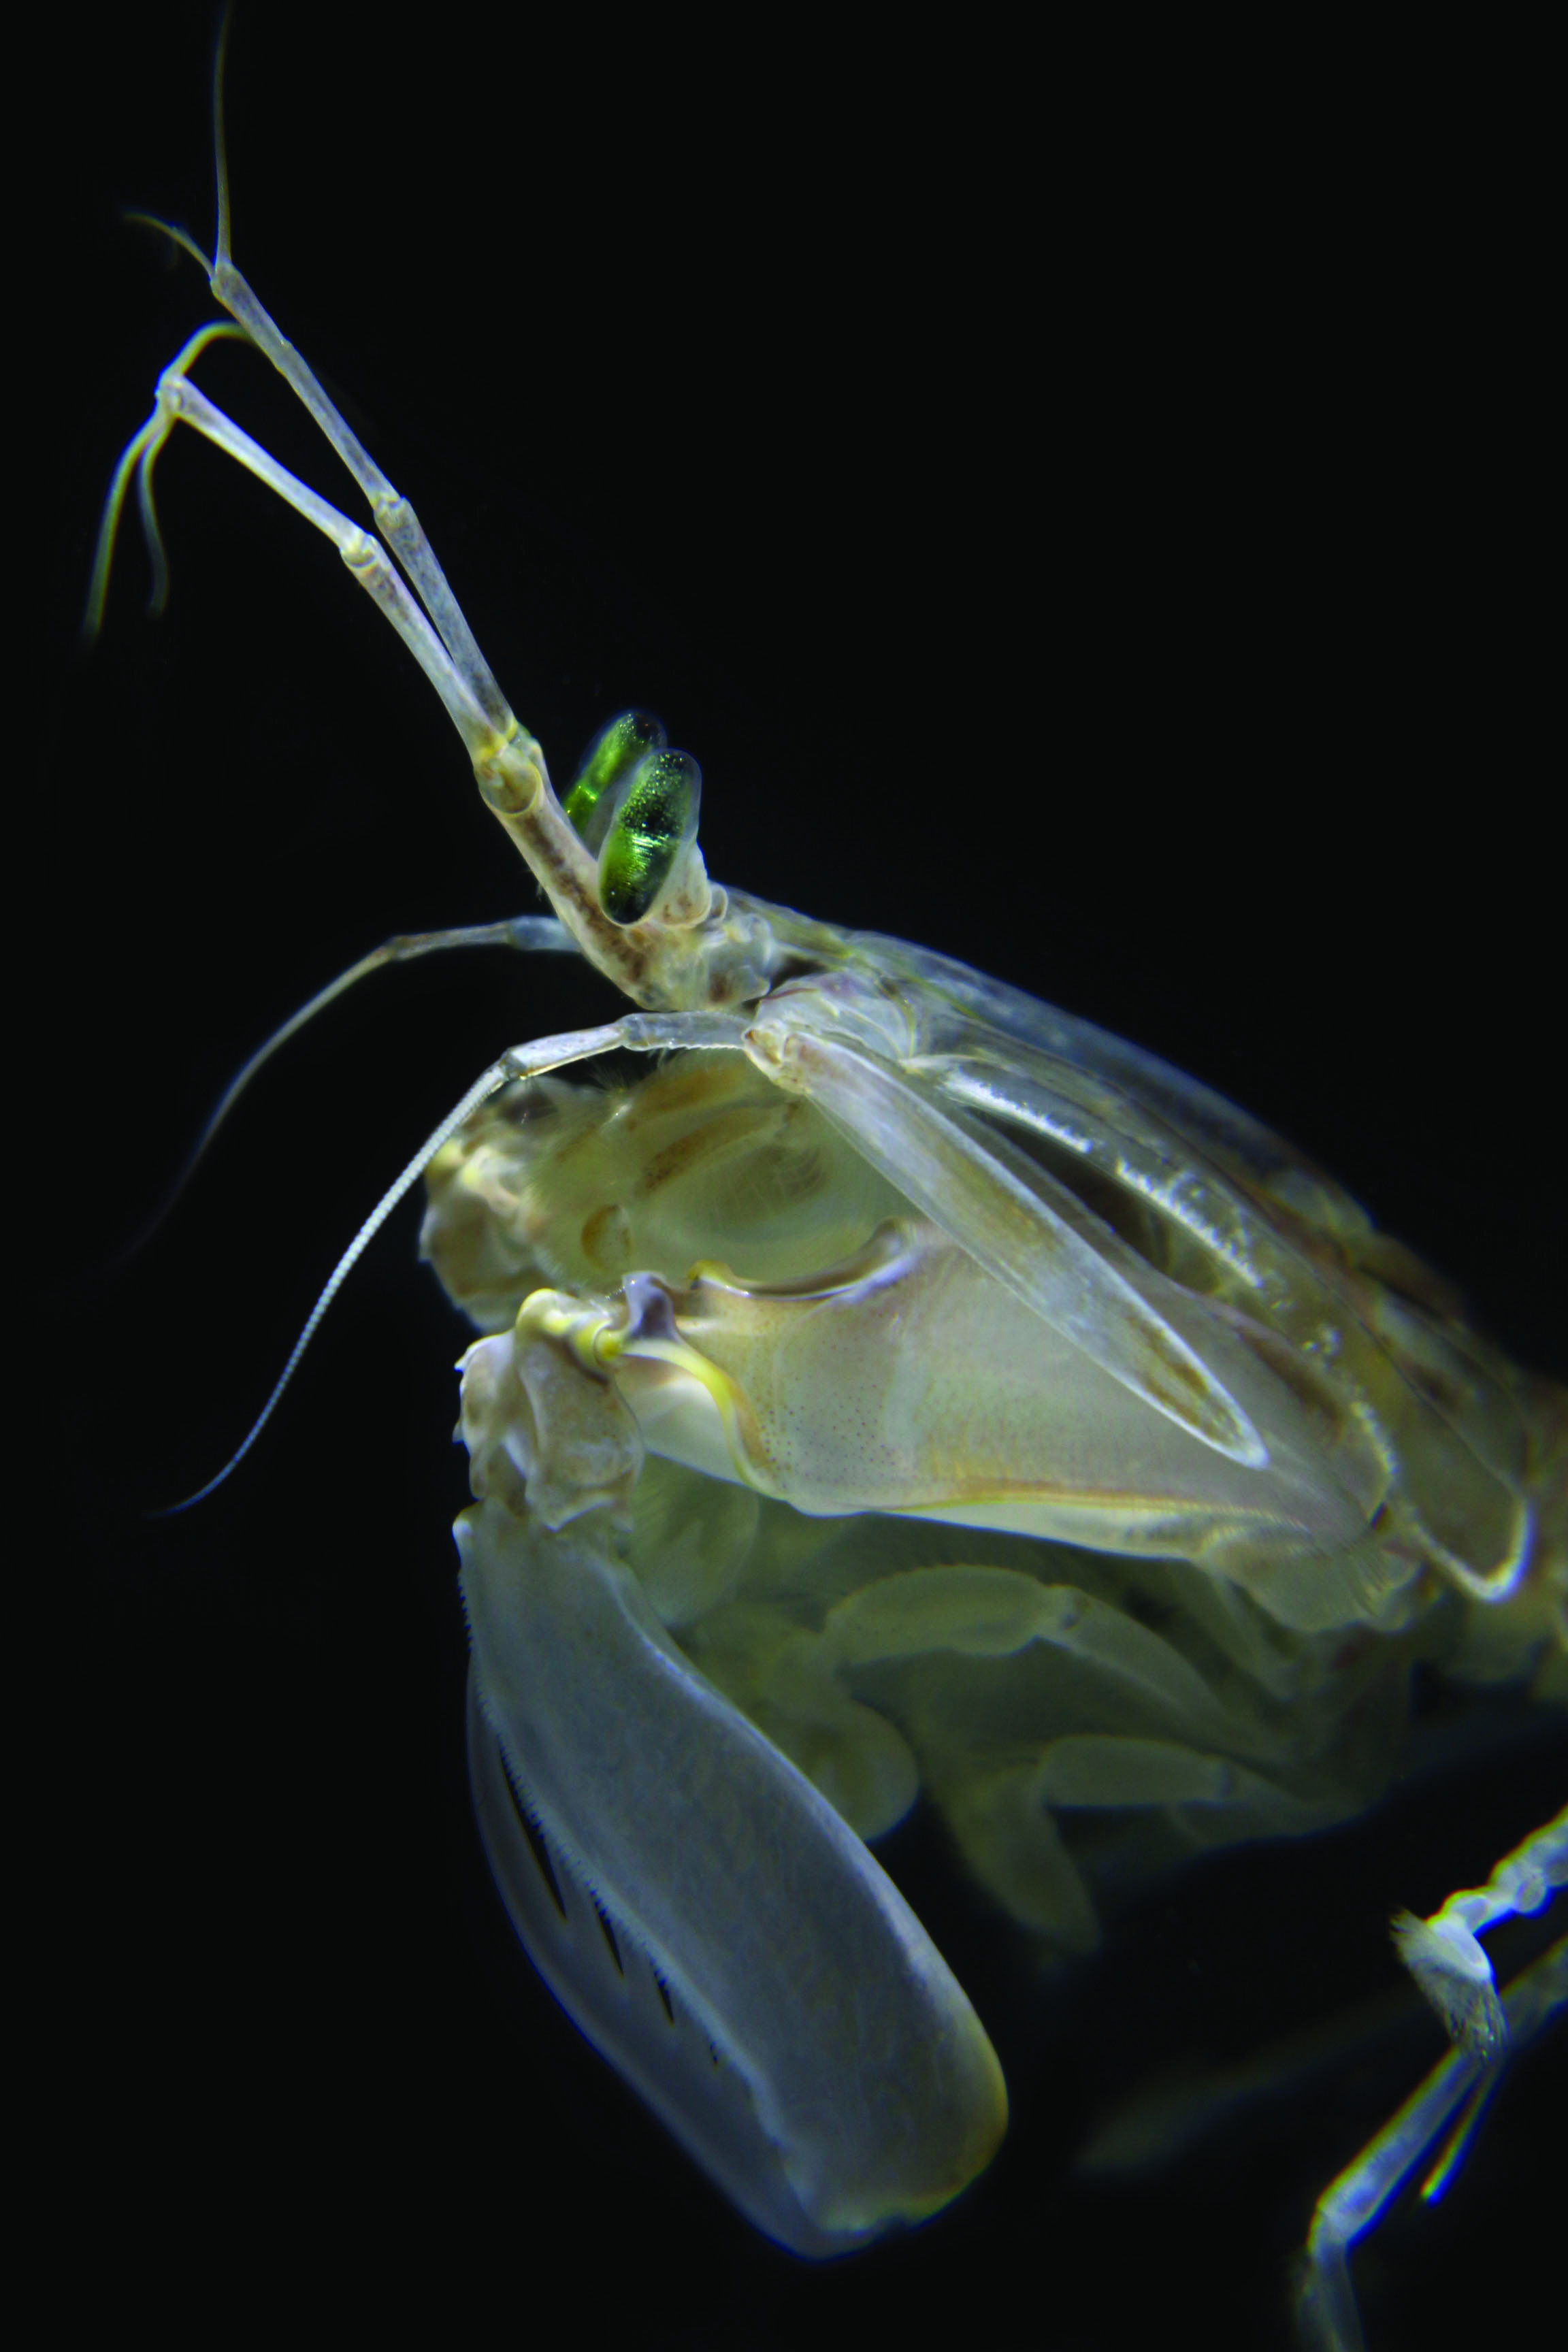 The Neuroethology of Mantis Shrimp Strikes